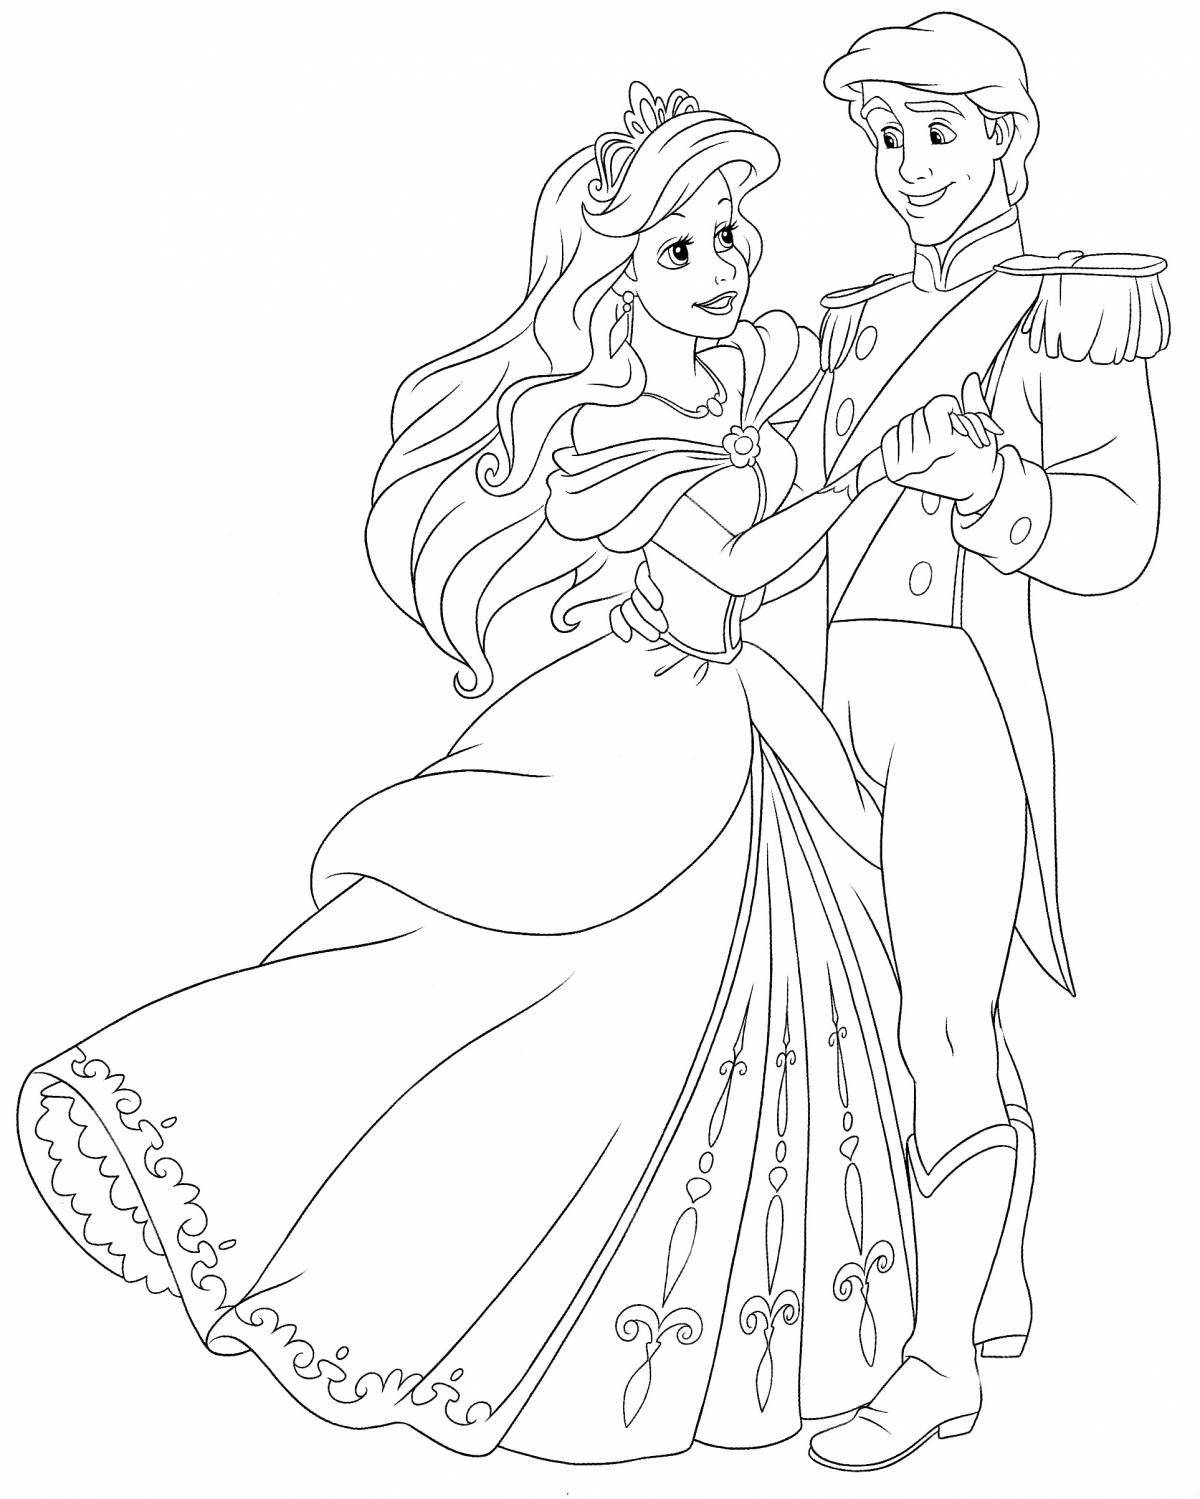 Prince Charming and Princess Coloring Page